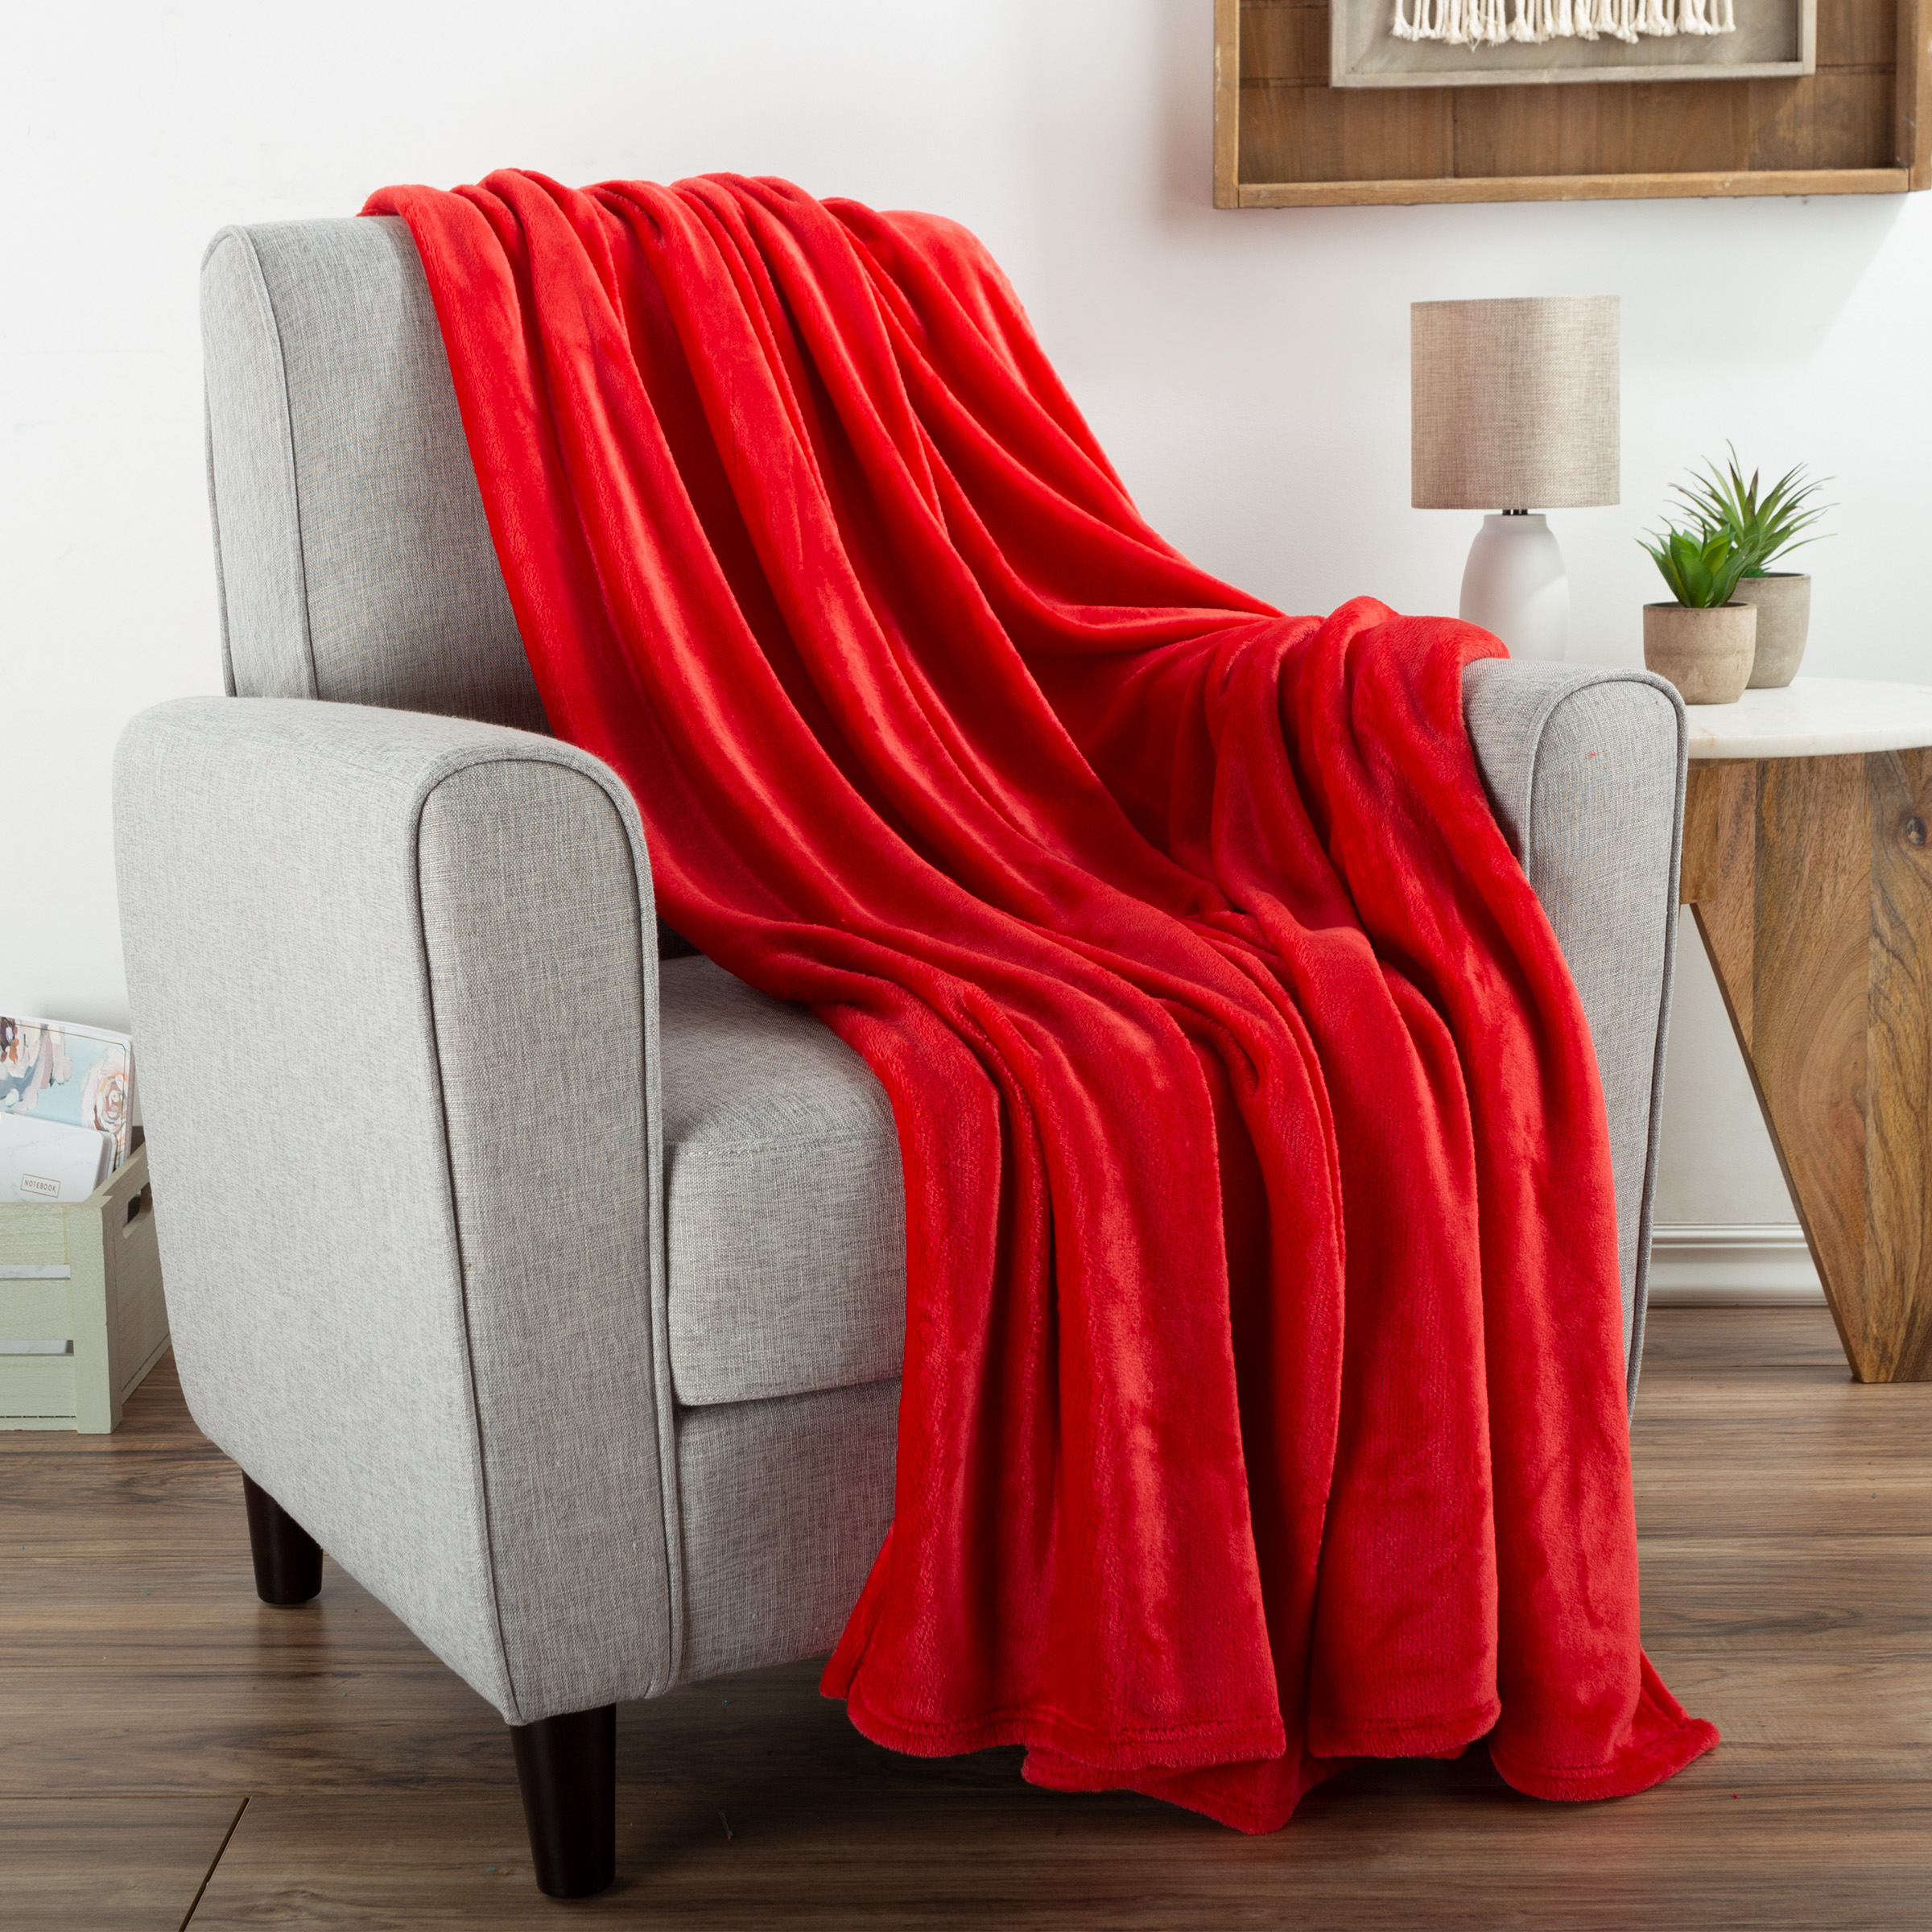 Fleece Throw Blanket- For Couch, Home Décor, Sofa & Chair- Oversized 60” X 70”- Lightweight, Soft & Plush Microfiber - Gray